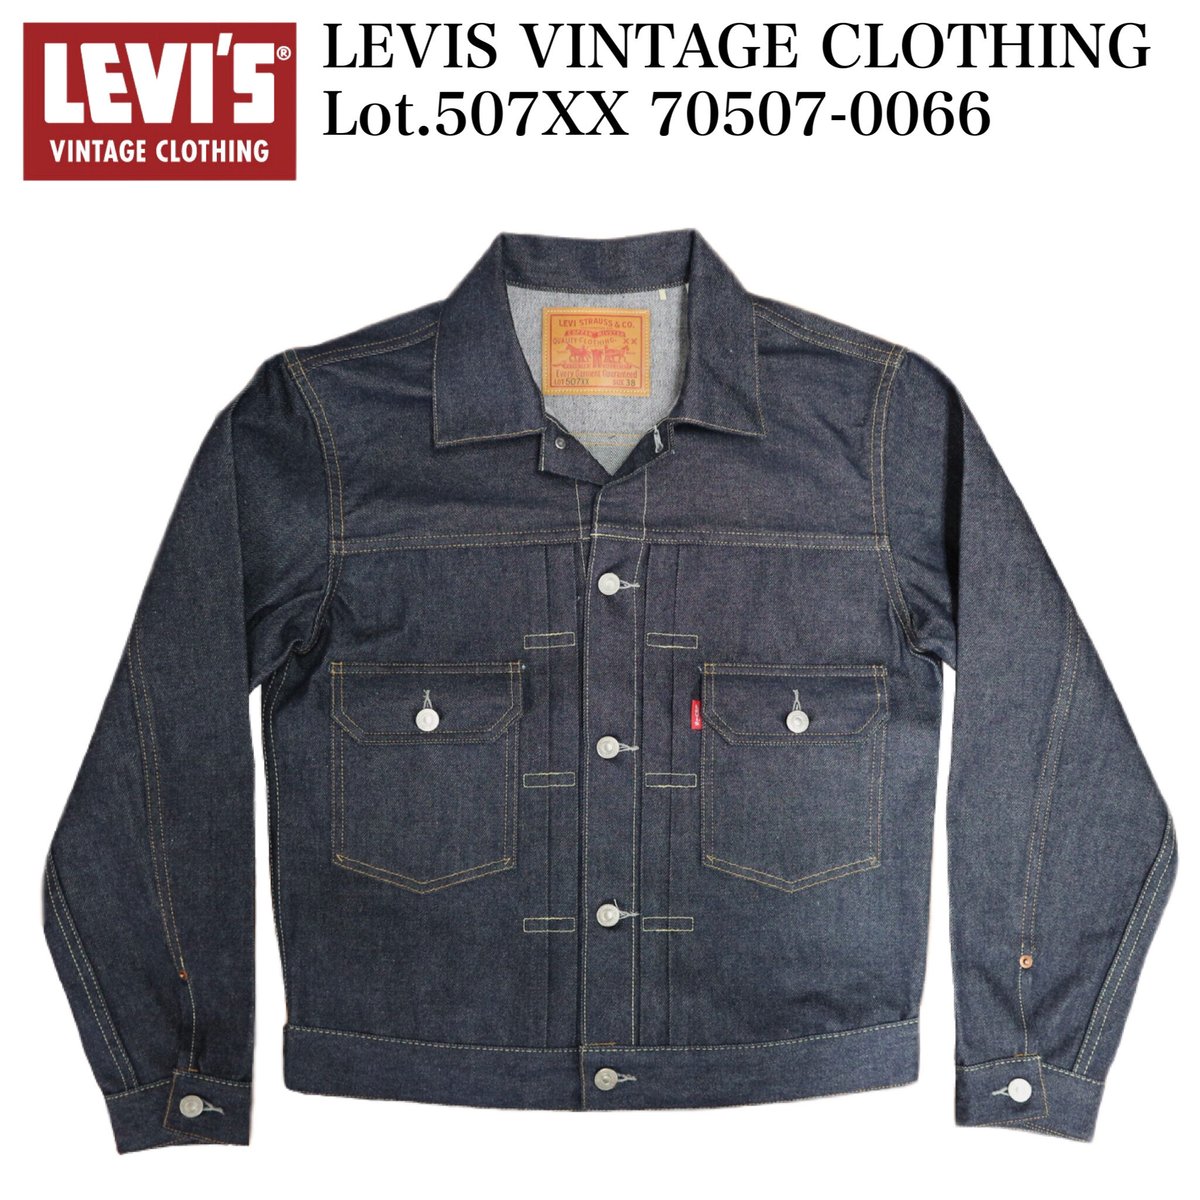 levi's vintage clothing - 4